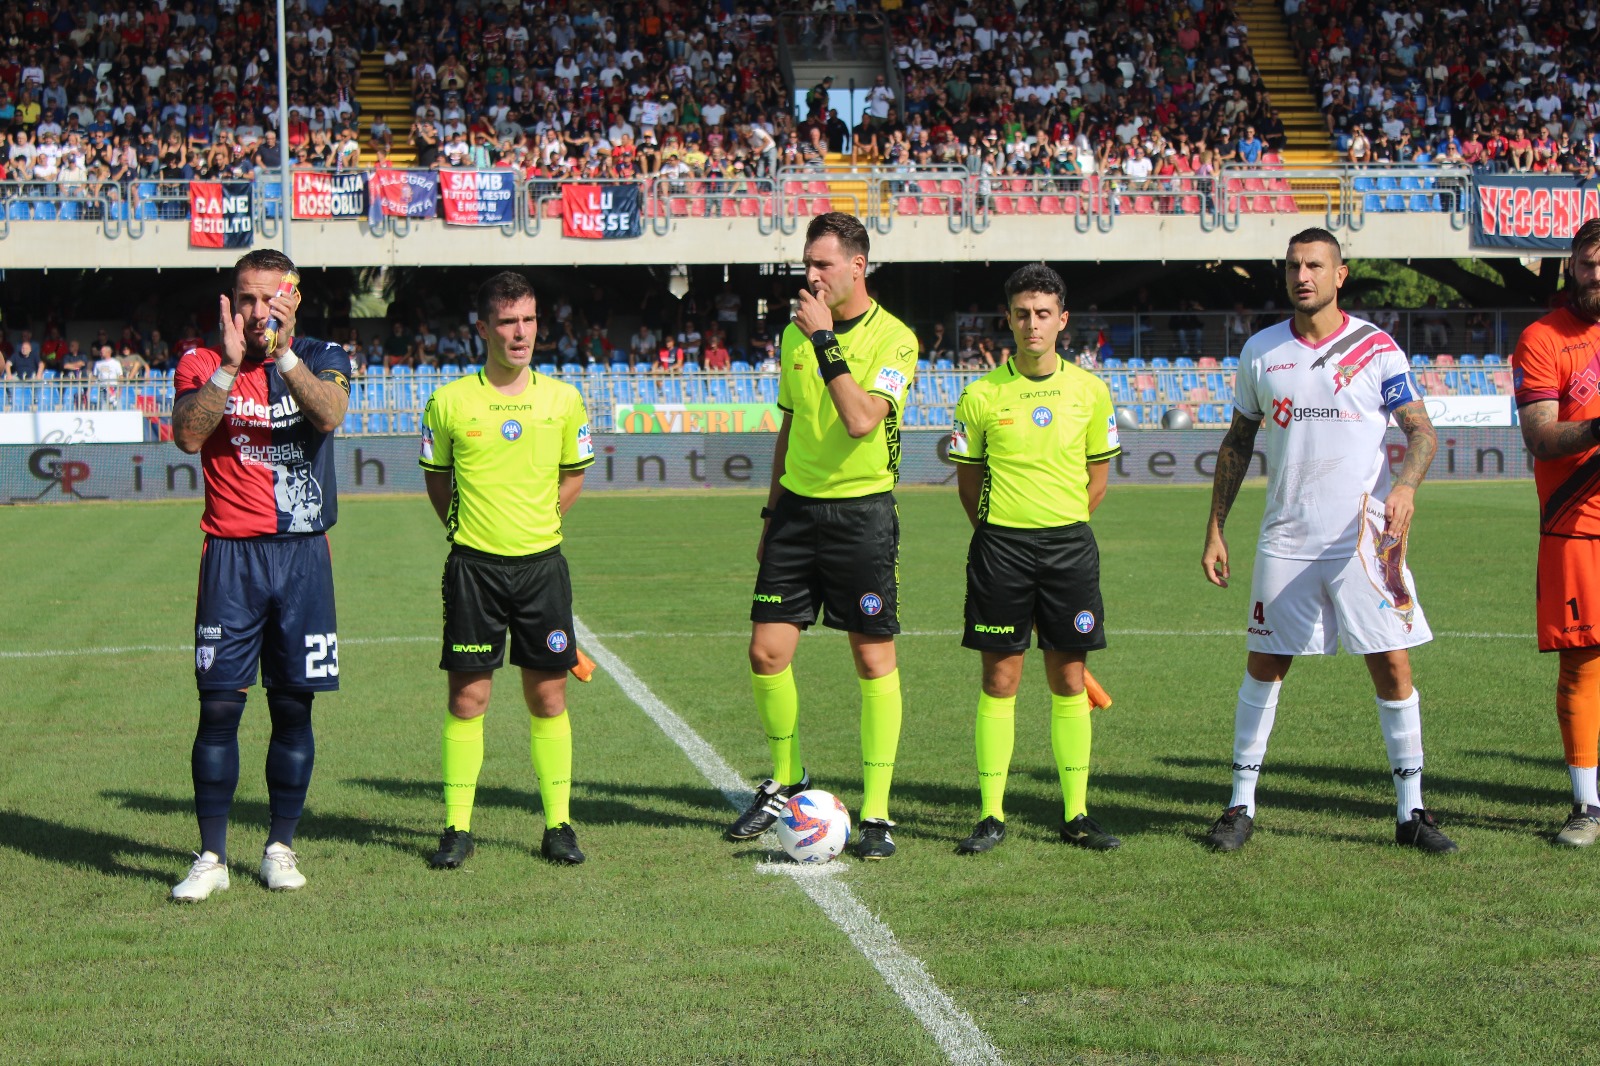 Samb-Fano 0-0: i rossoblù dominano, Alessandro fallisce un rigore